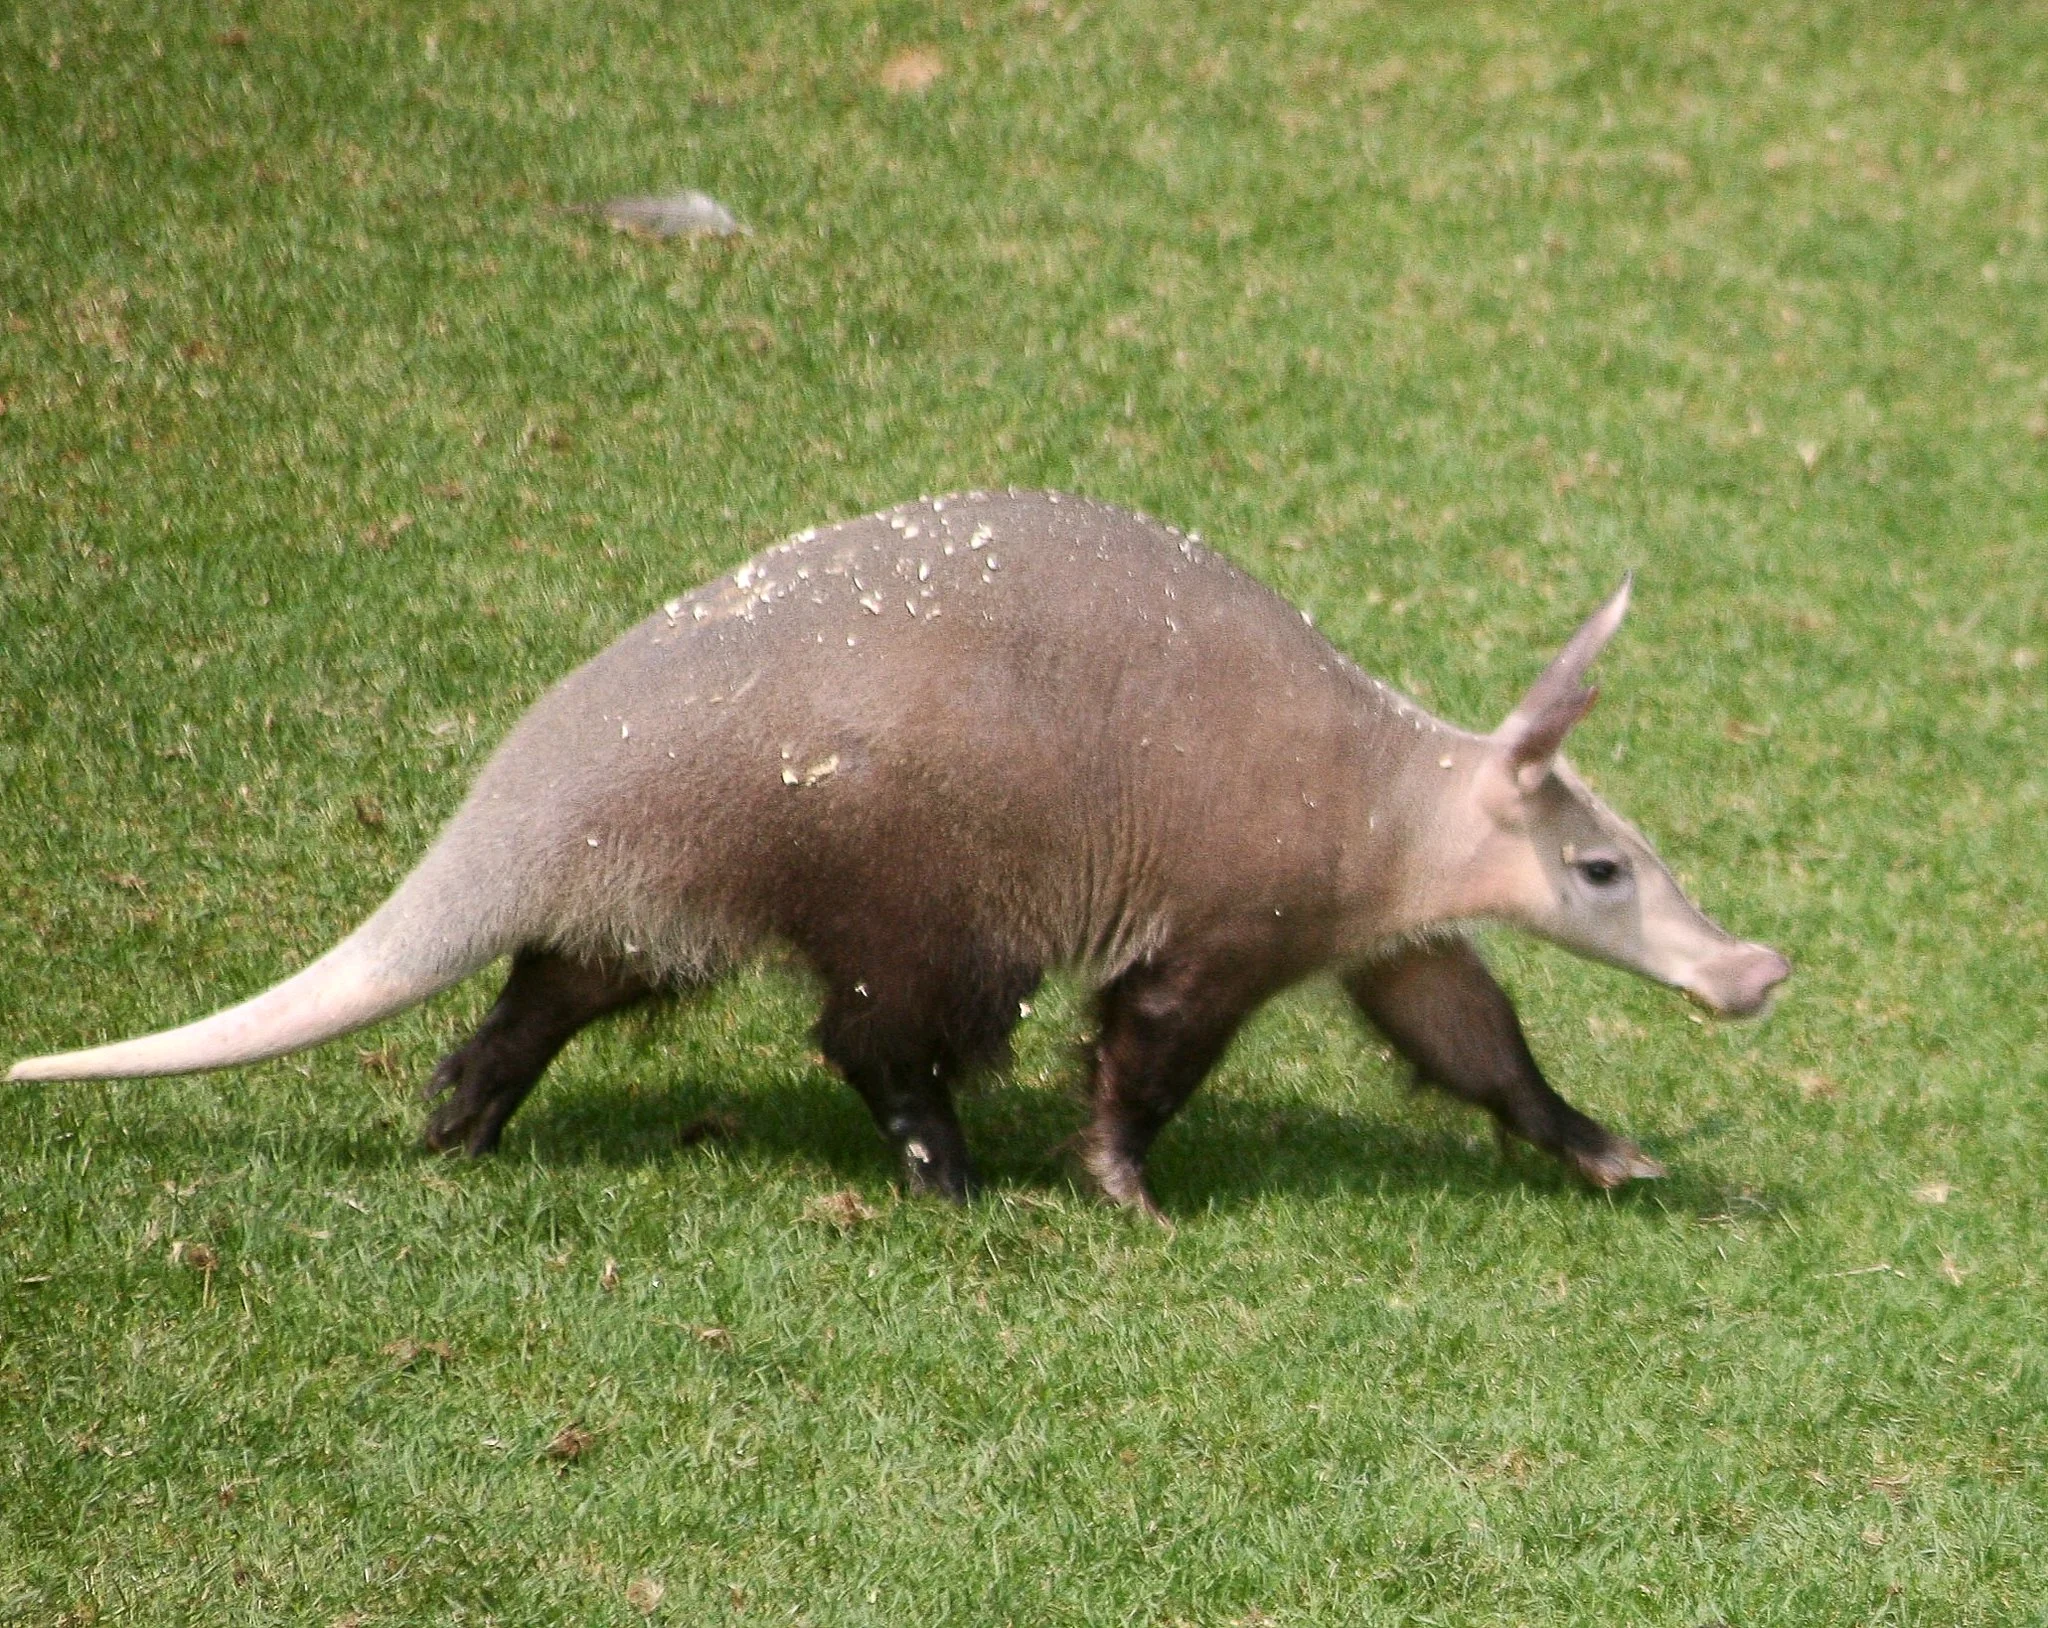 Aardvark vs anteater vs armadillo